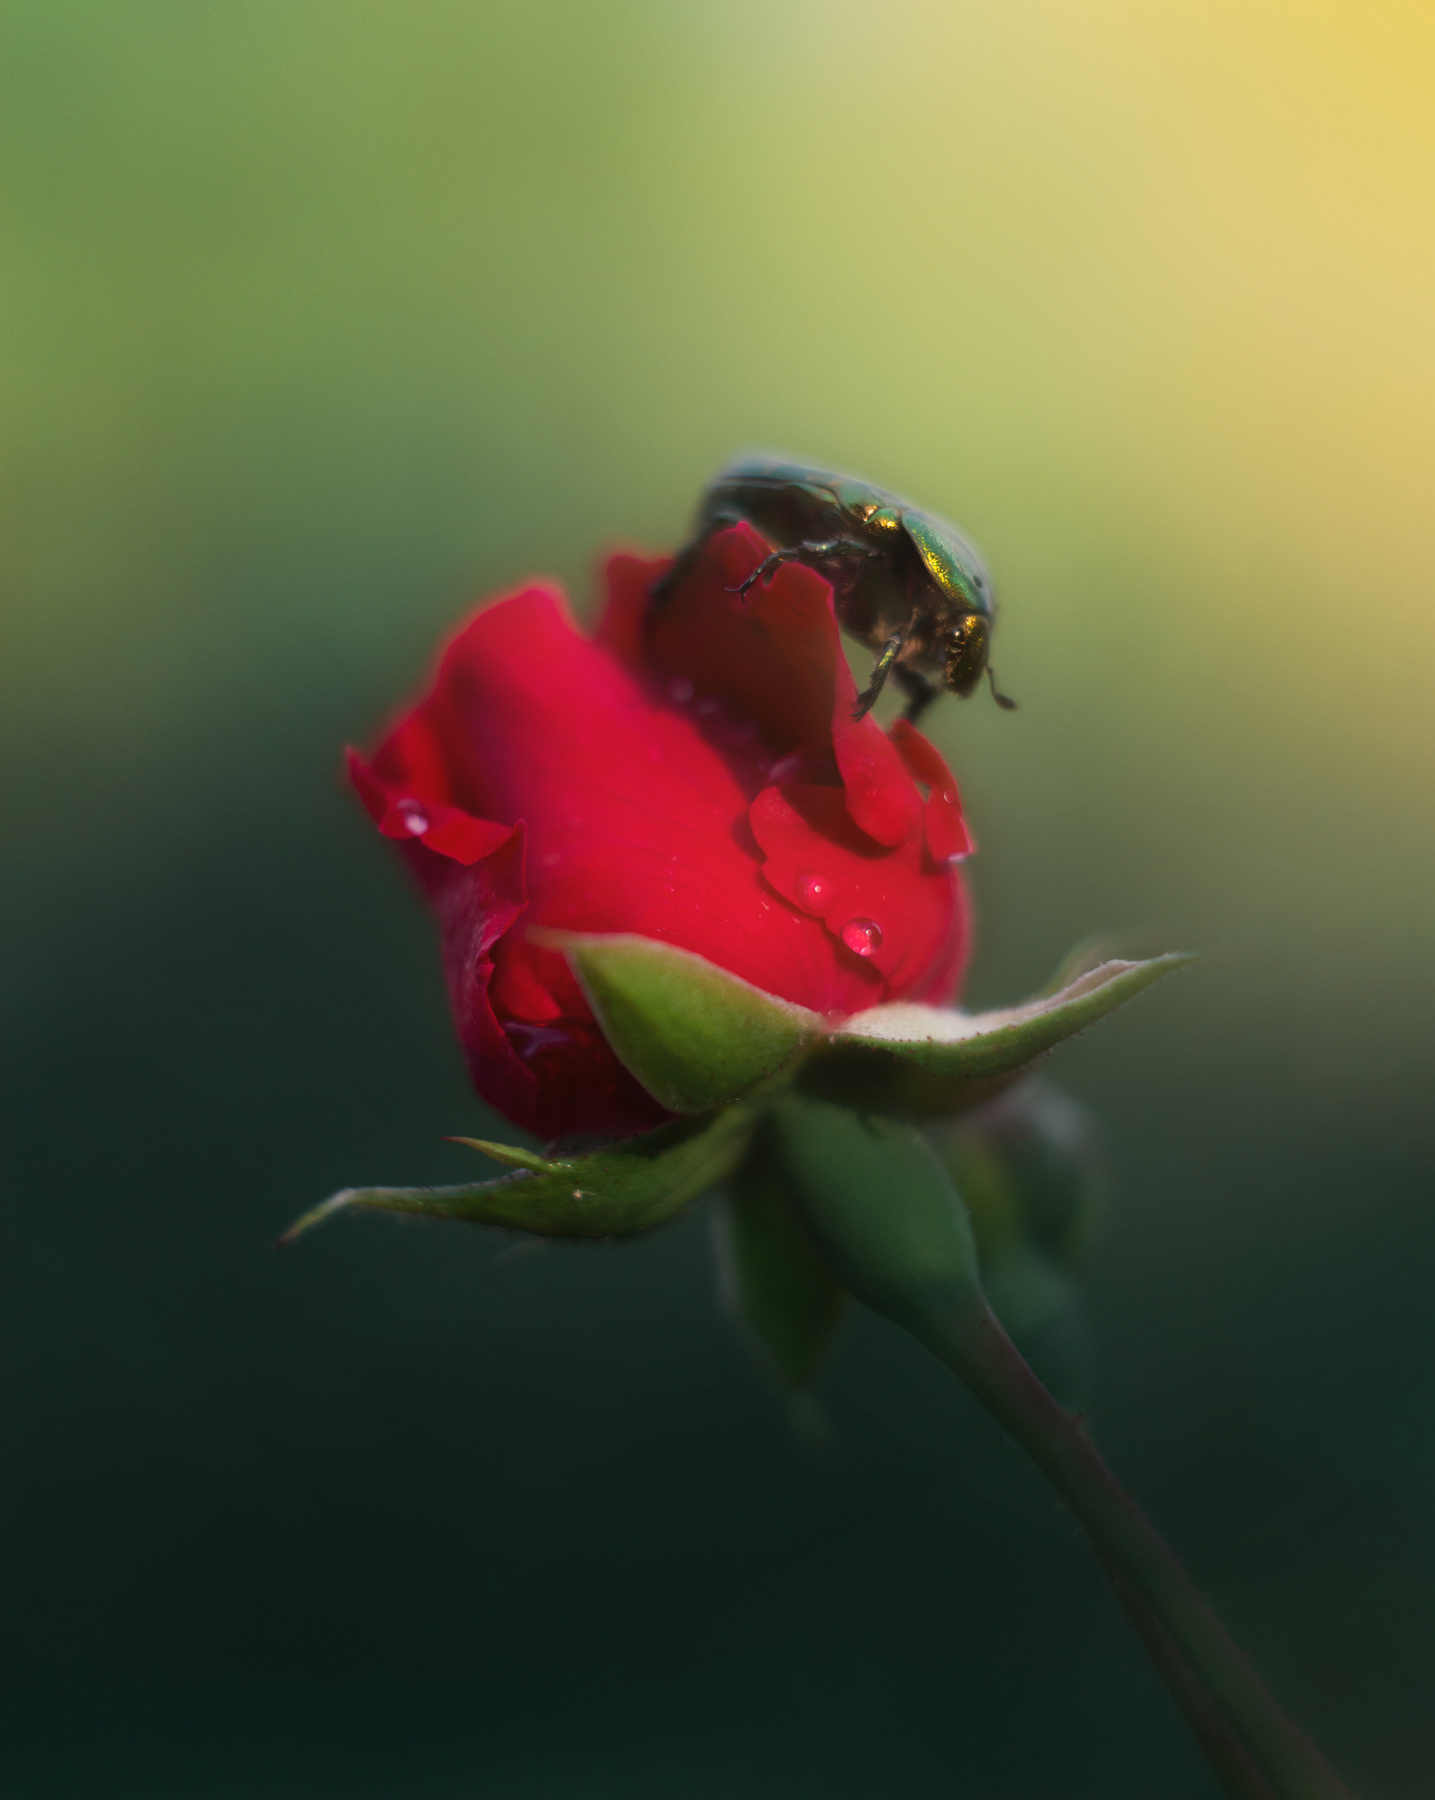 Evening Guest flower bug rose warmth sunlight outdoor green red yellow summer drops water soft лето тепло жук цветок роза зелёный красный жёлтый капли вода мягкий